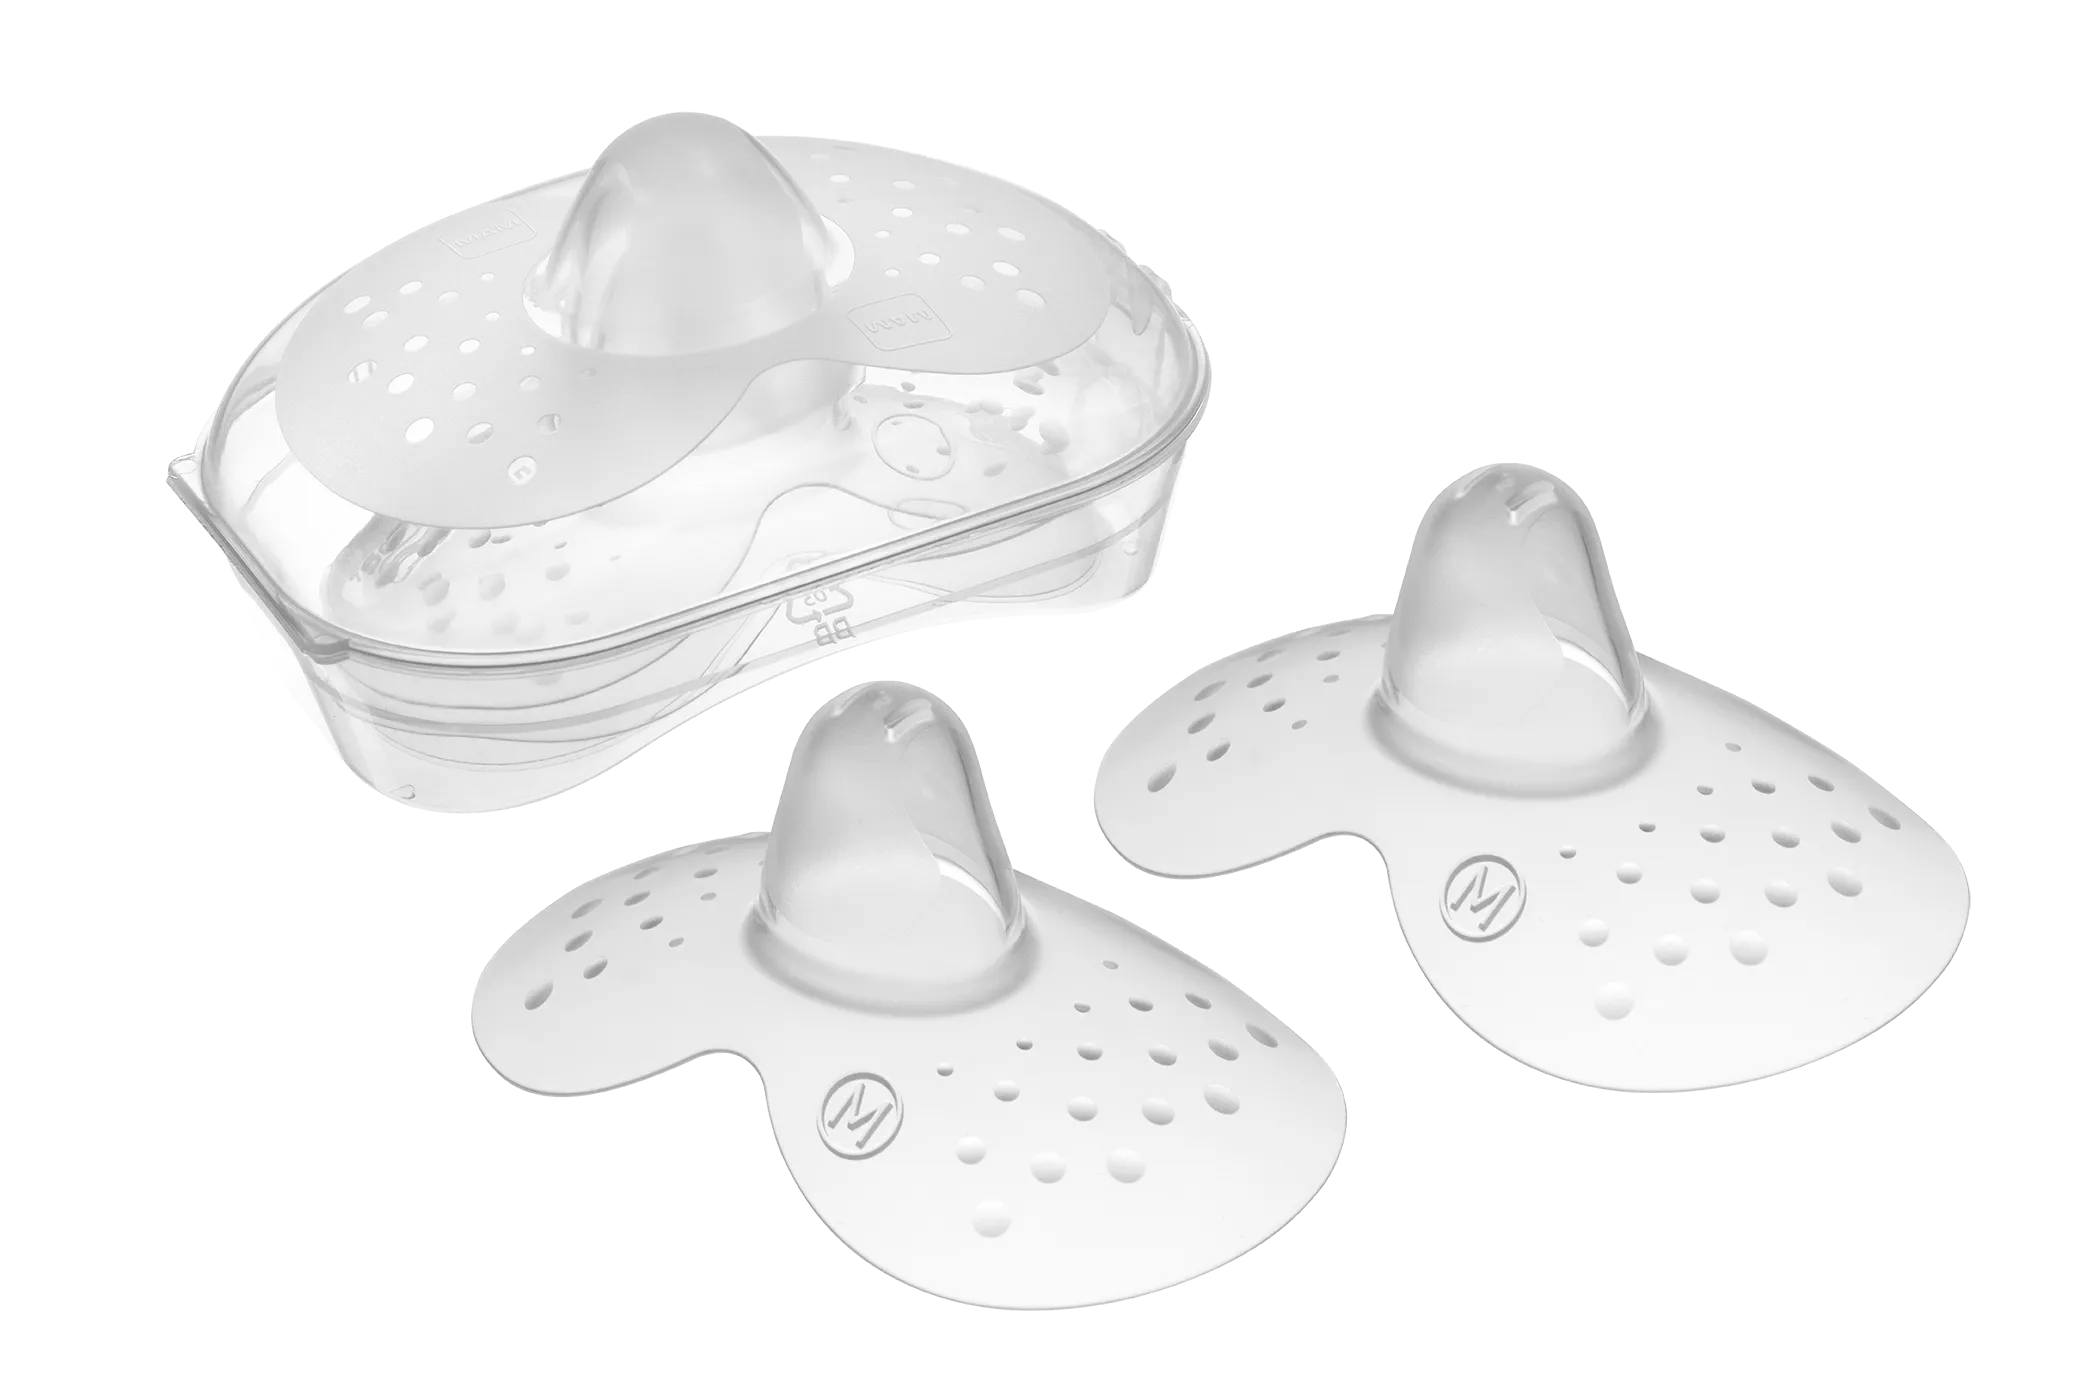 Nipple Shields, size M